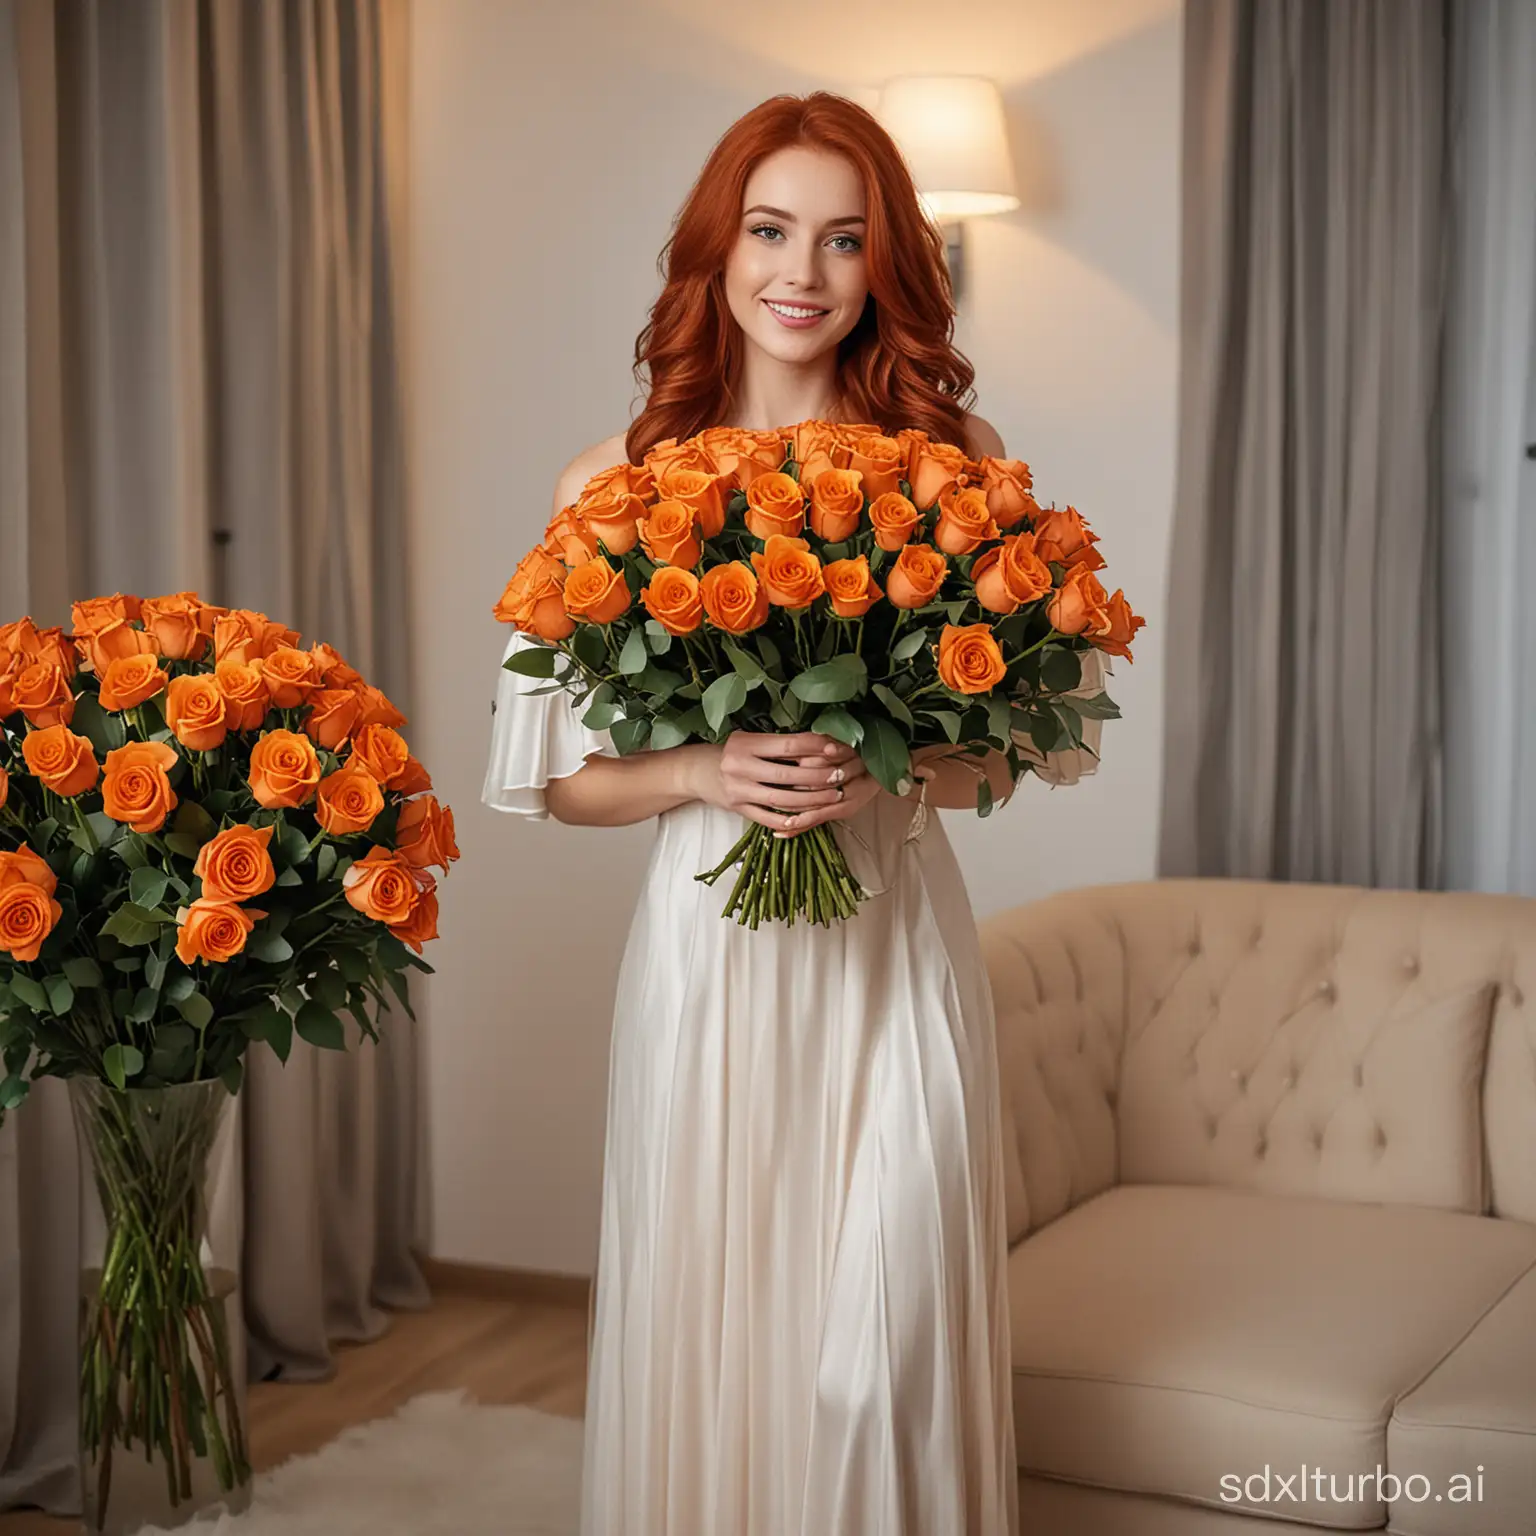 Elegant-Woman-with-101-Orange-Roses-in-Luxurious-Living-Room